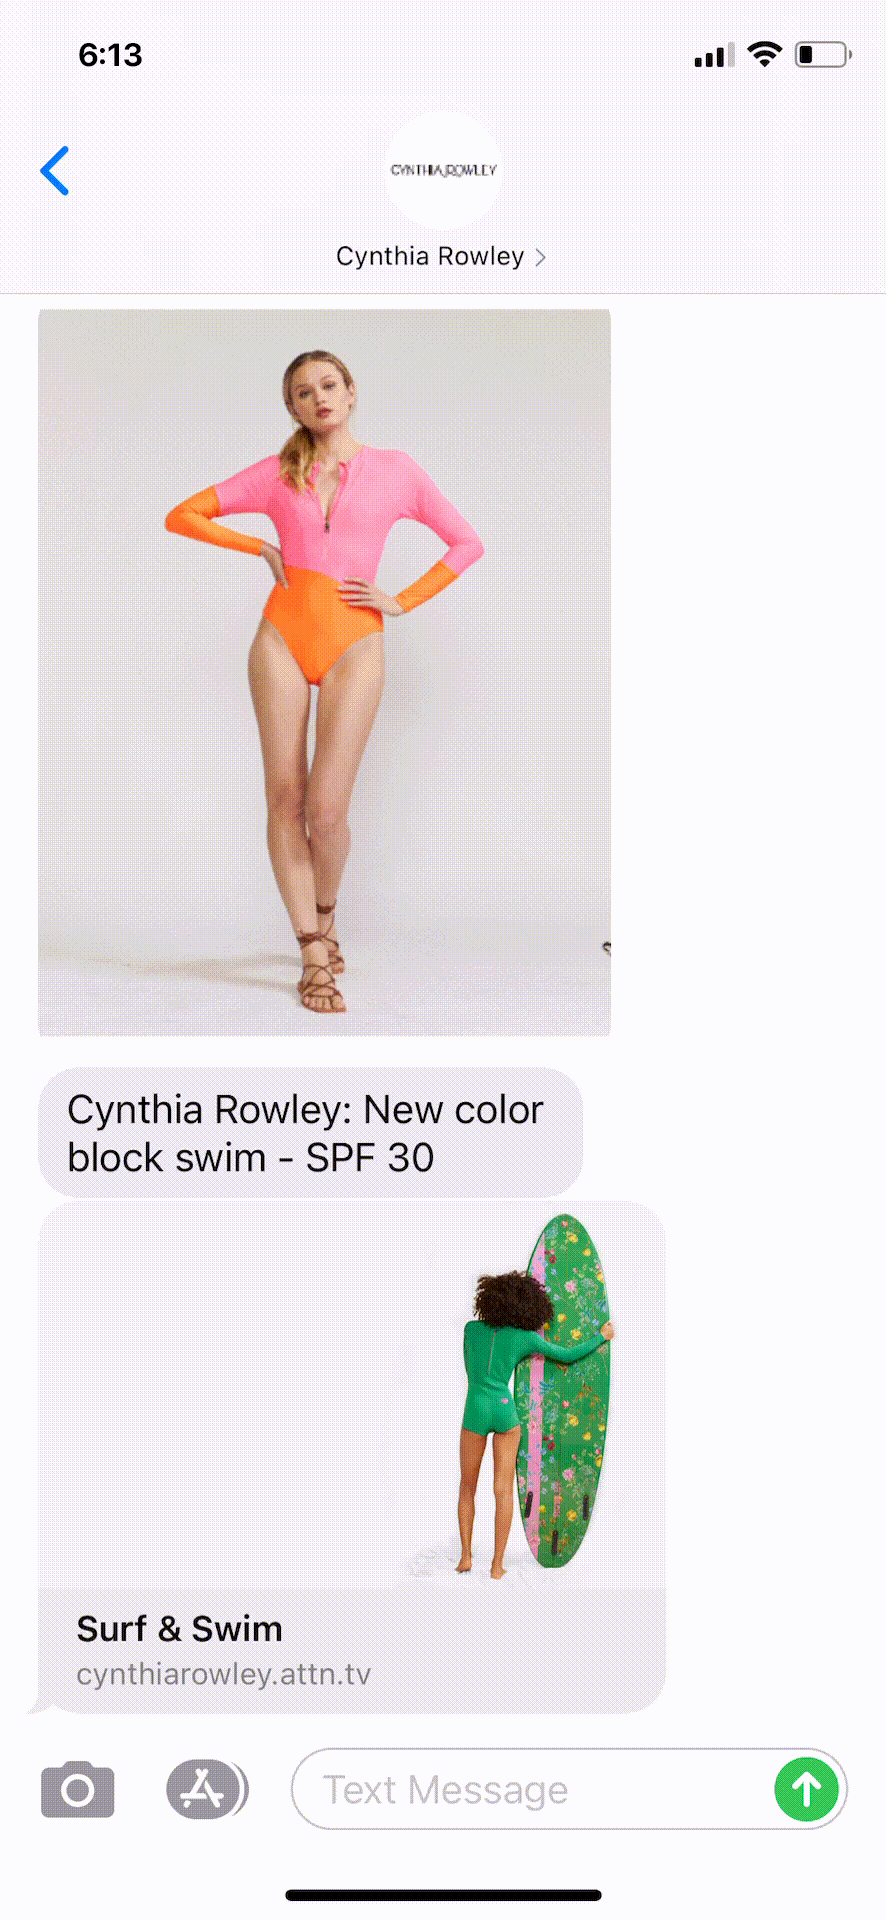 Cynthia-Rowley-Text-Message-Marketing-Example-04.23.2021